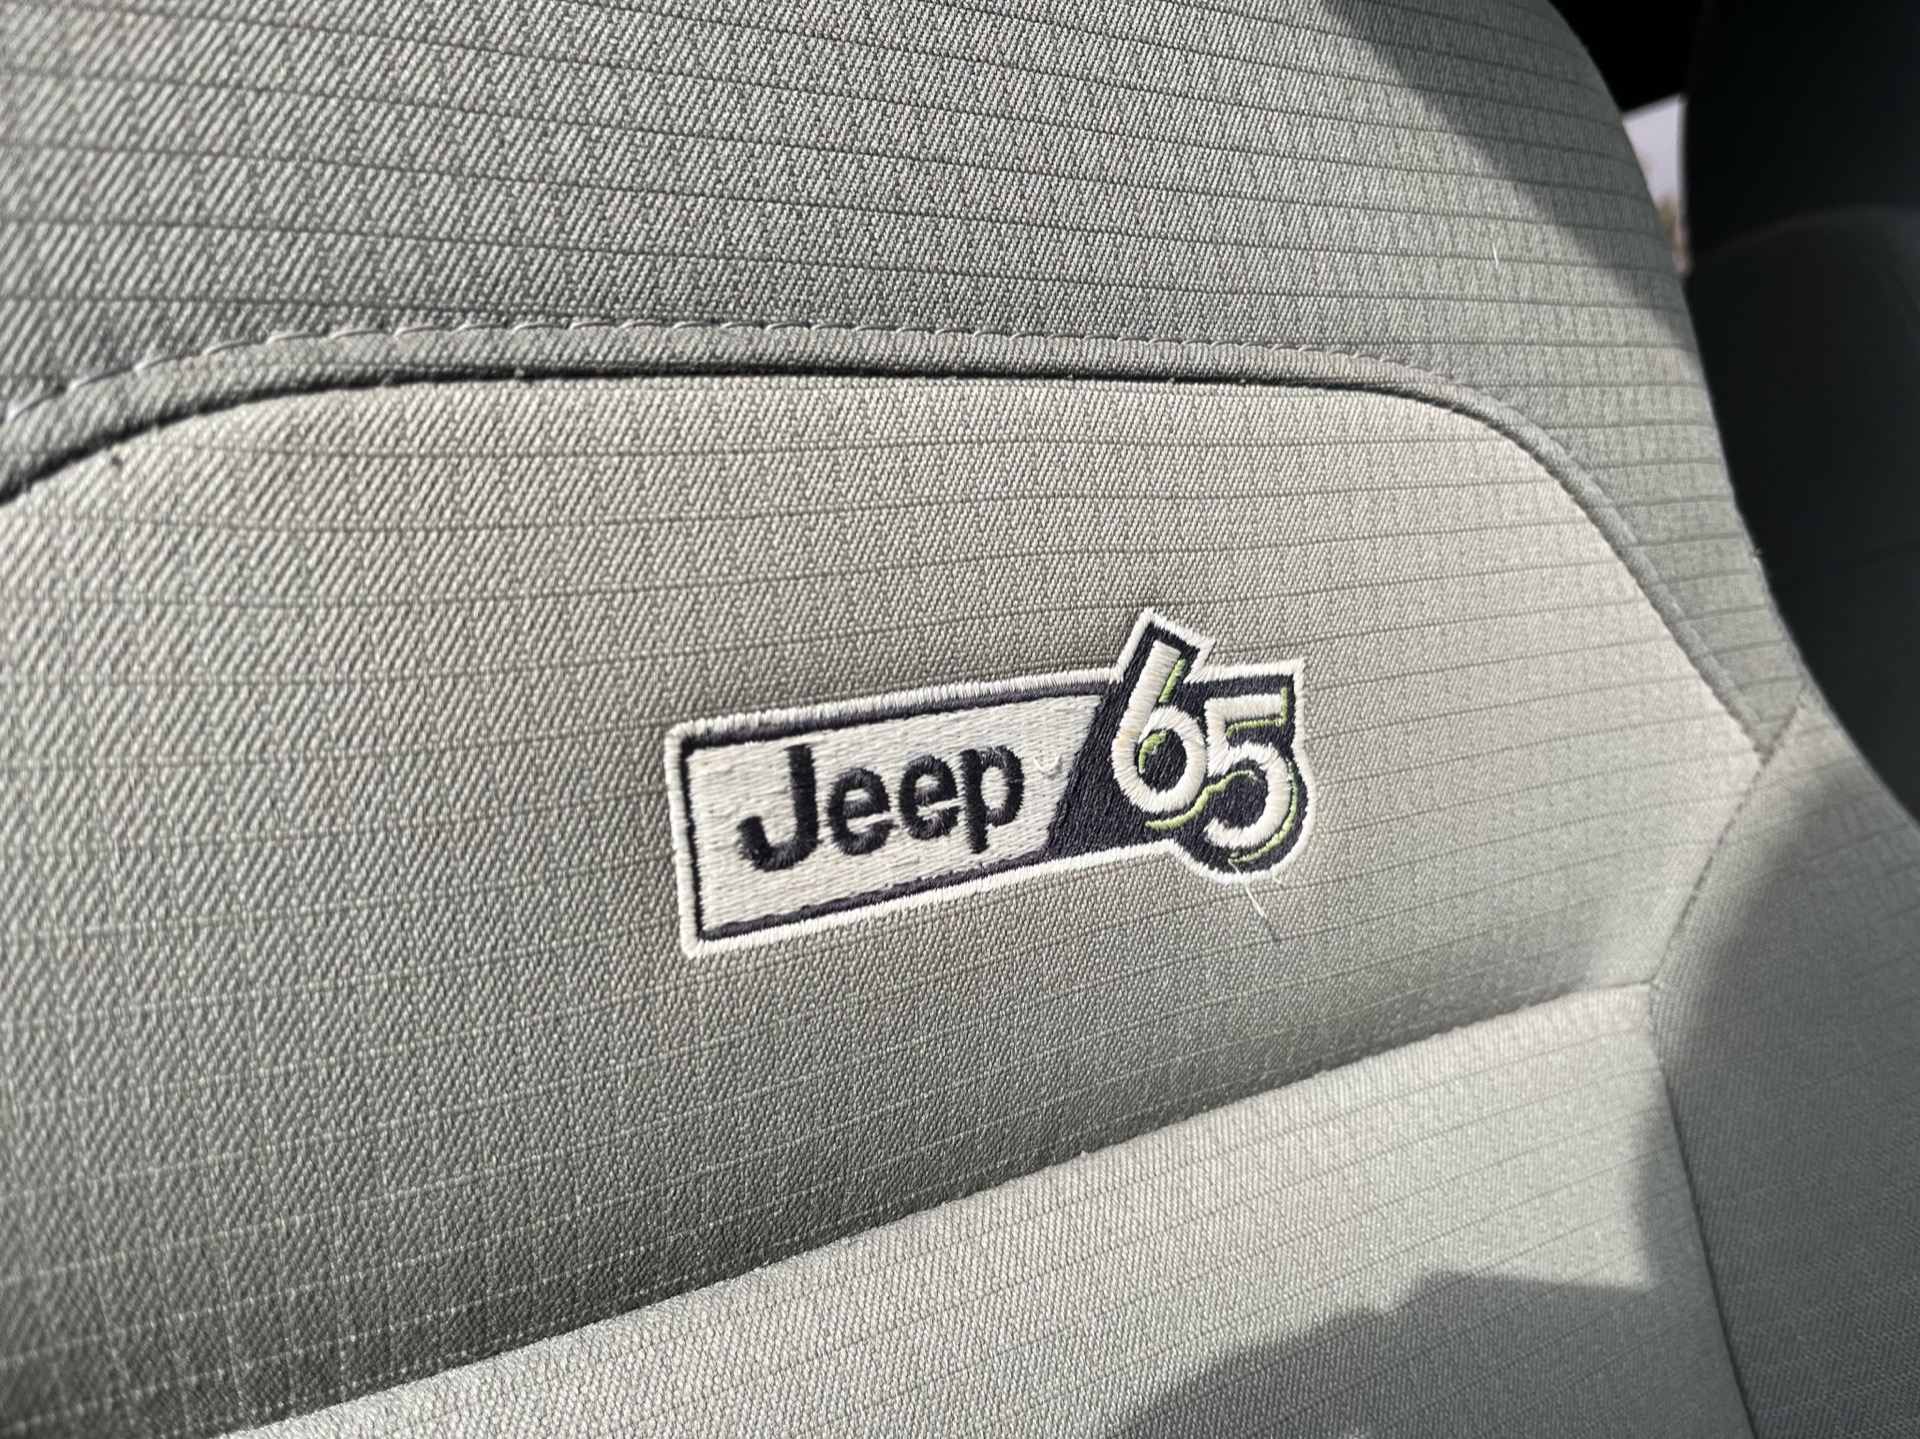 Used-2006-Jeep-Wrangler-65th-Anniversary-Edition